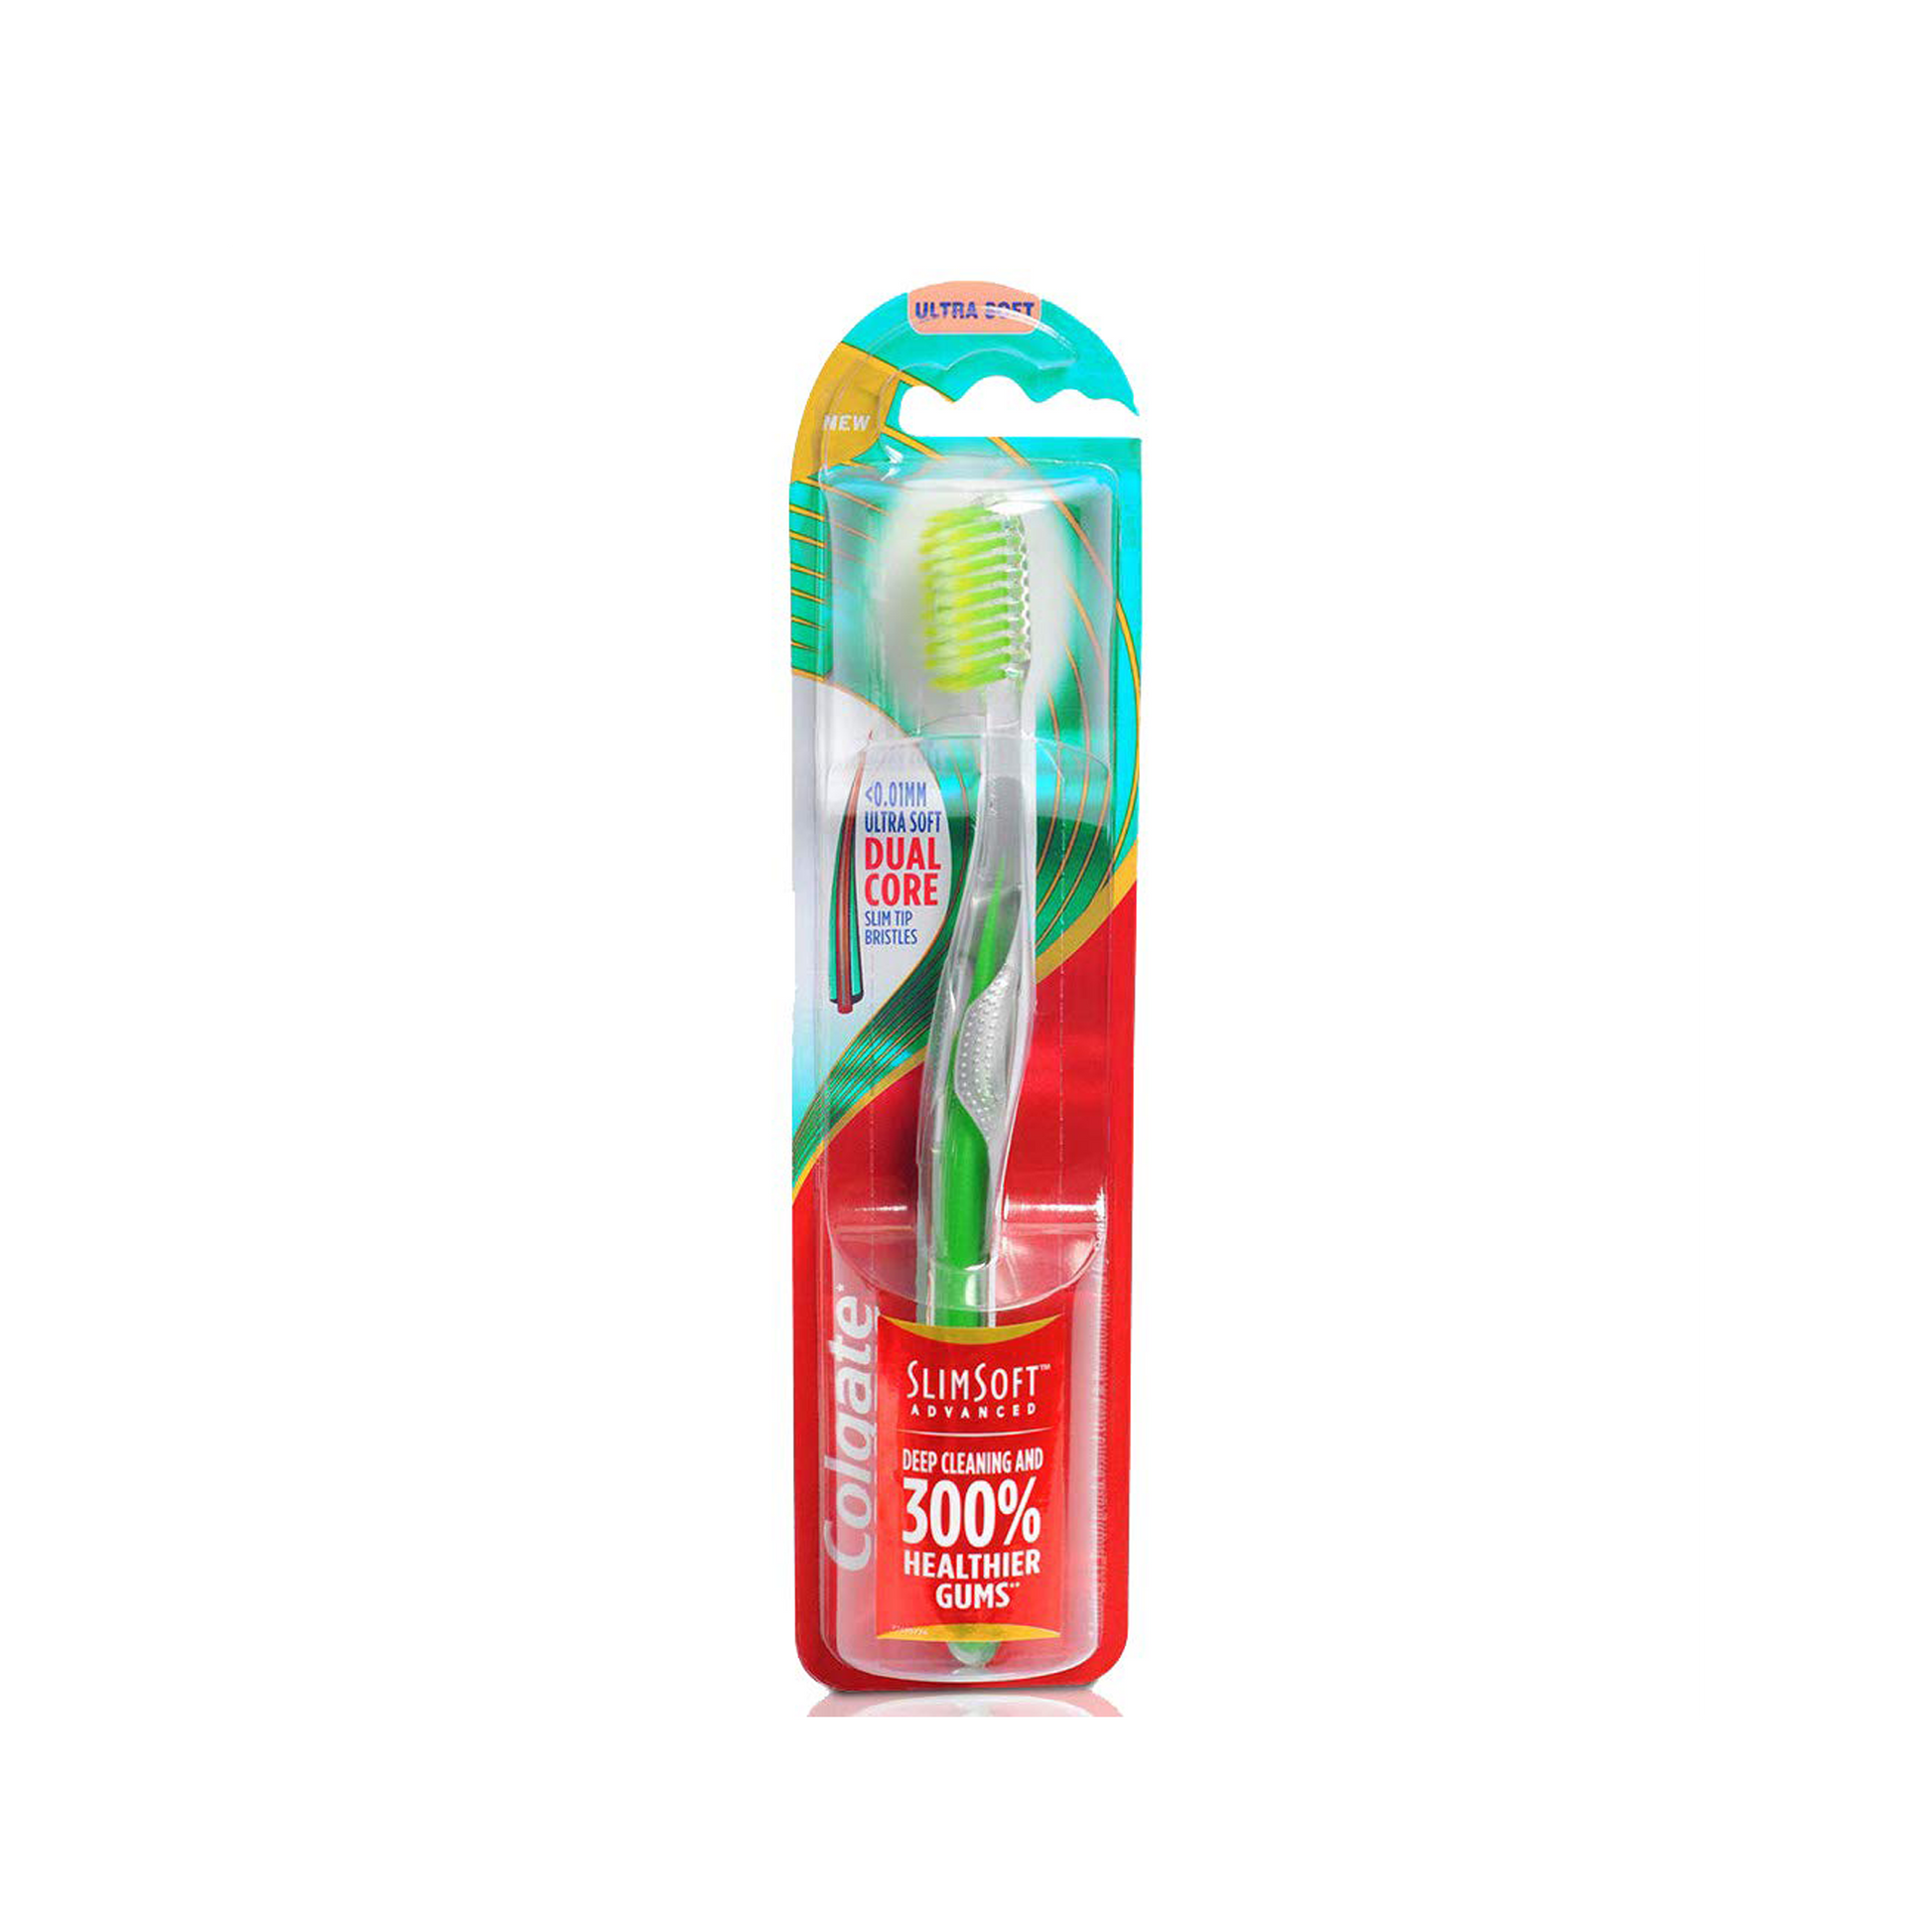 Colgate Slim Soft Advanced, Ultra Soft Tooth Brush.